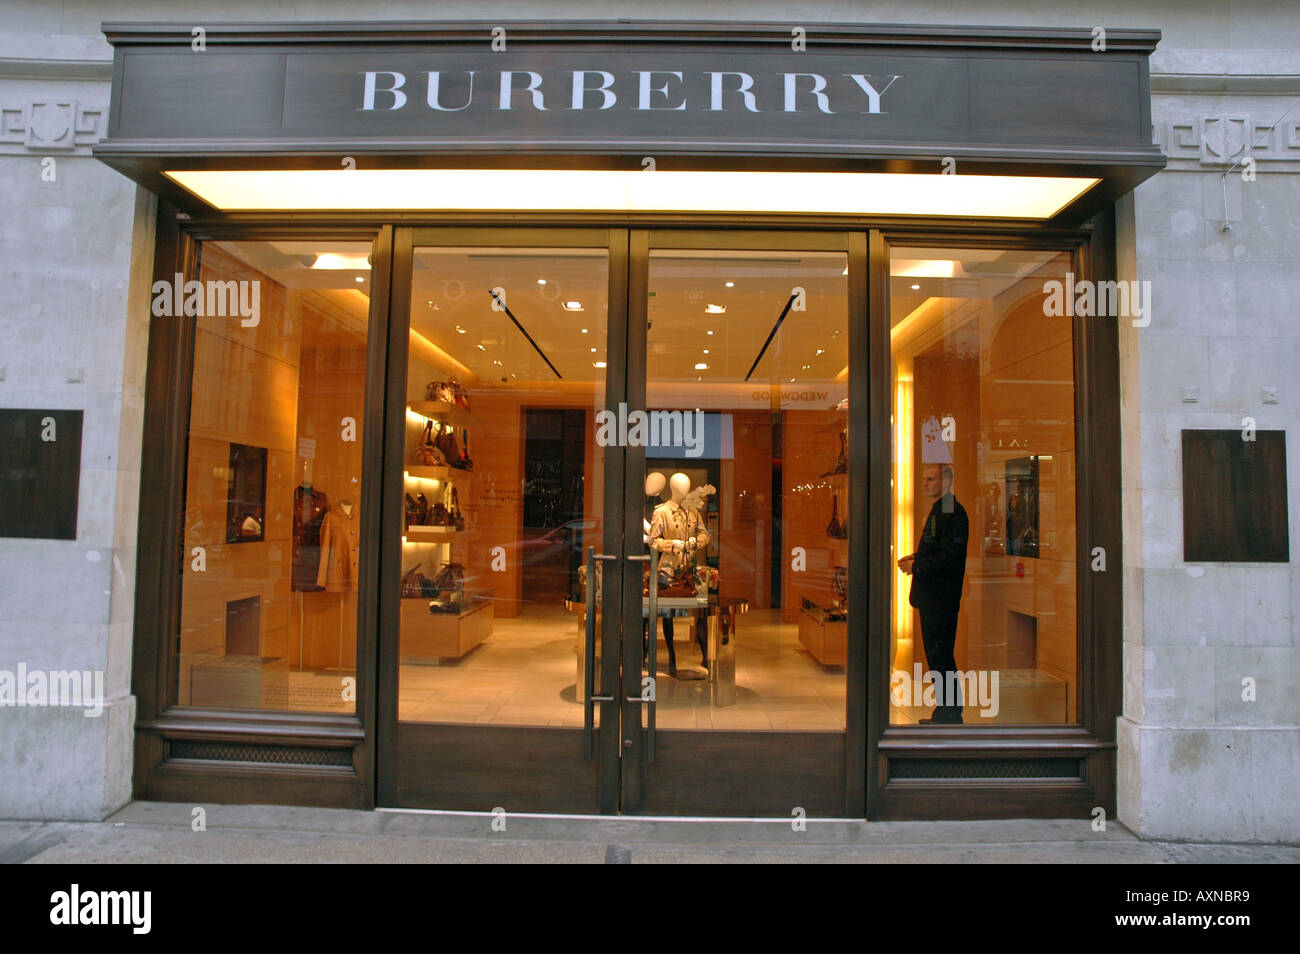 Burberry shop at Regent Street in London, UK Stock Photo - Alamy